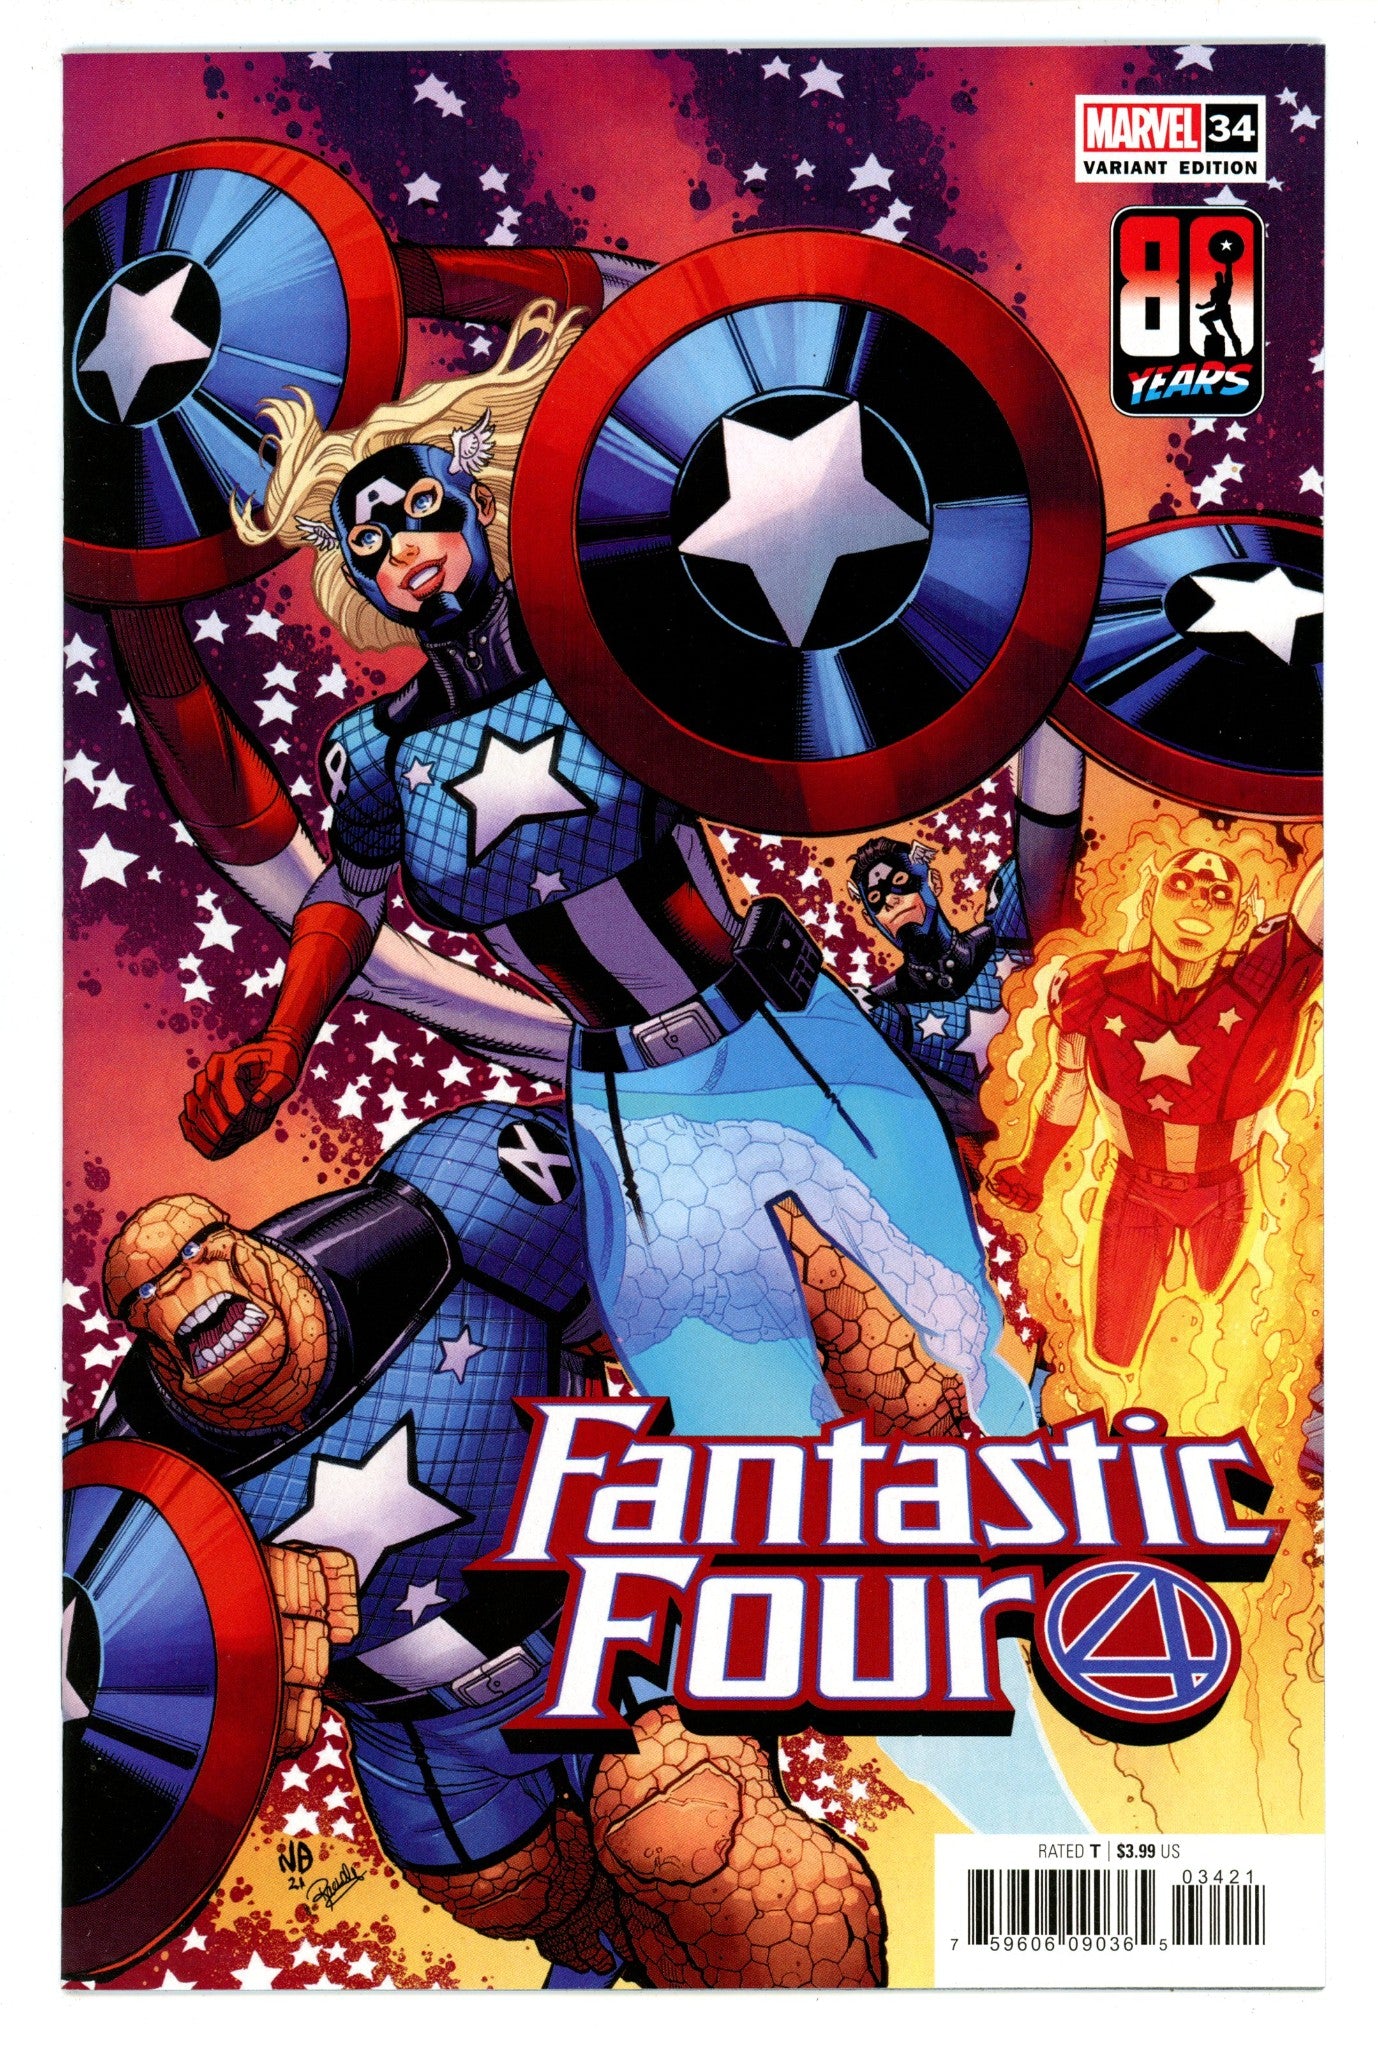 Fantastic Four Vol 6 34 (679) High Grade (2021) Bradshaw Variant 